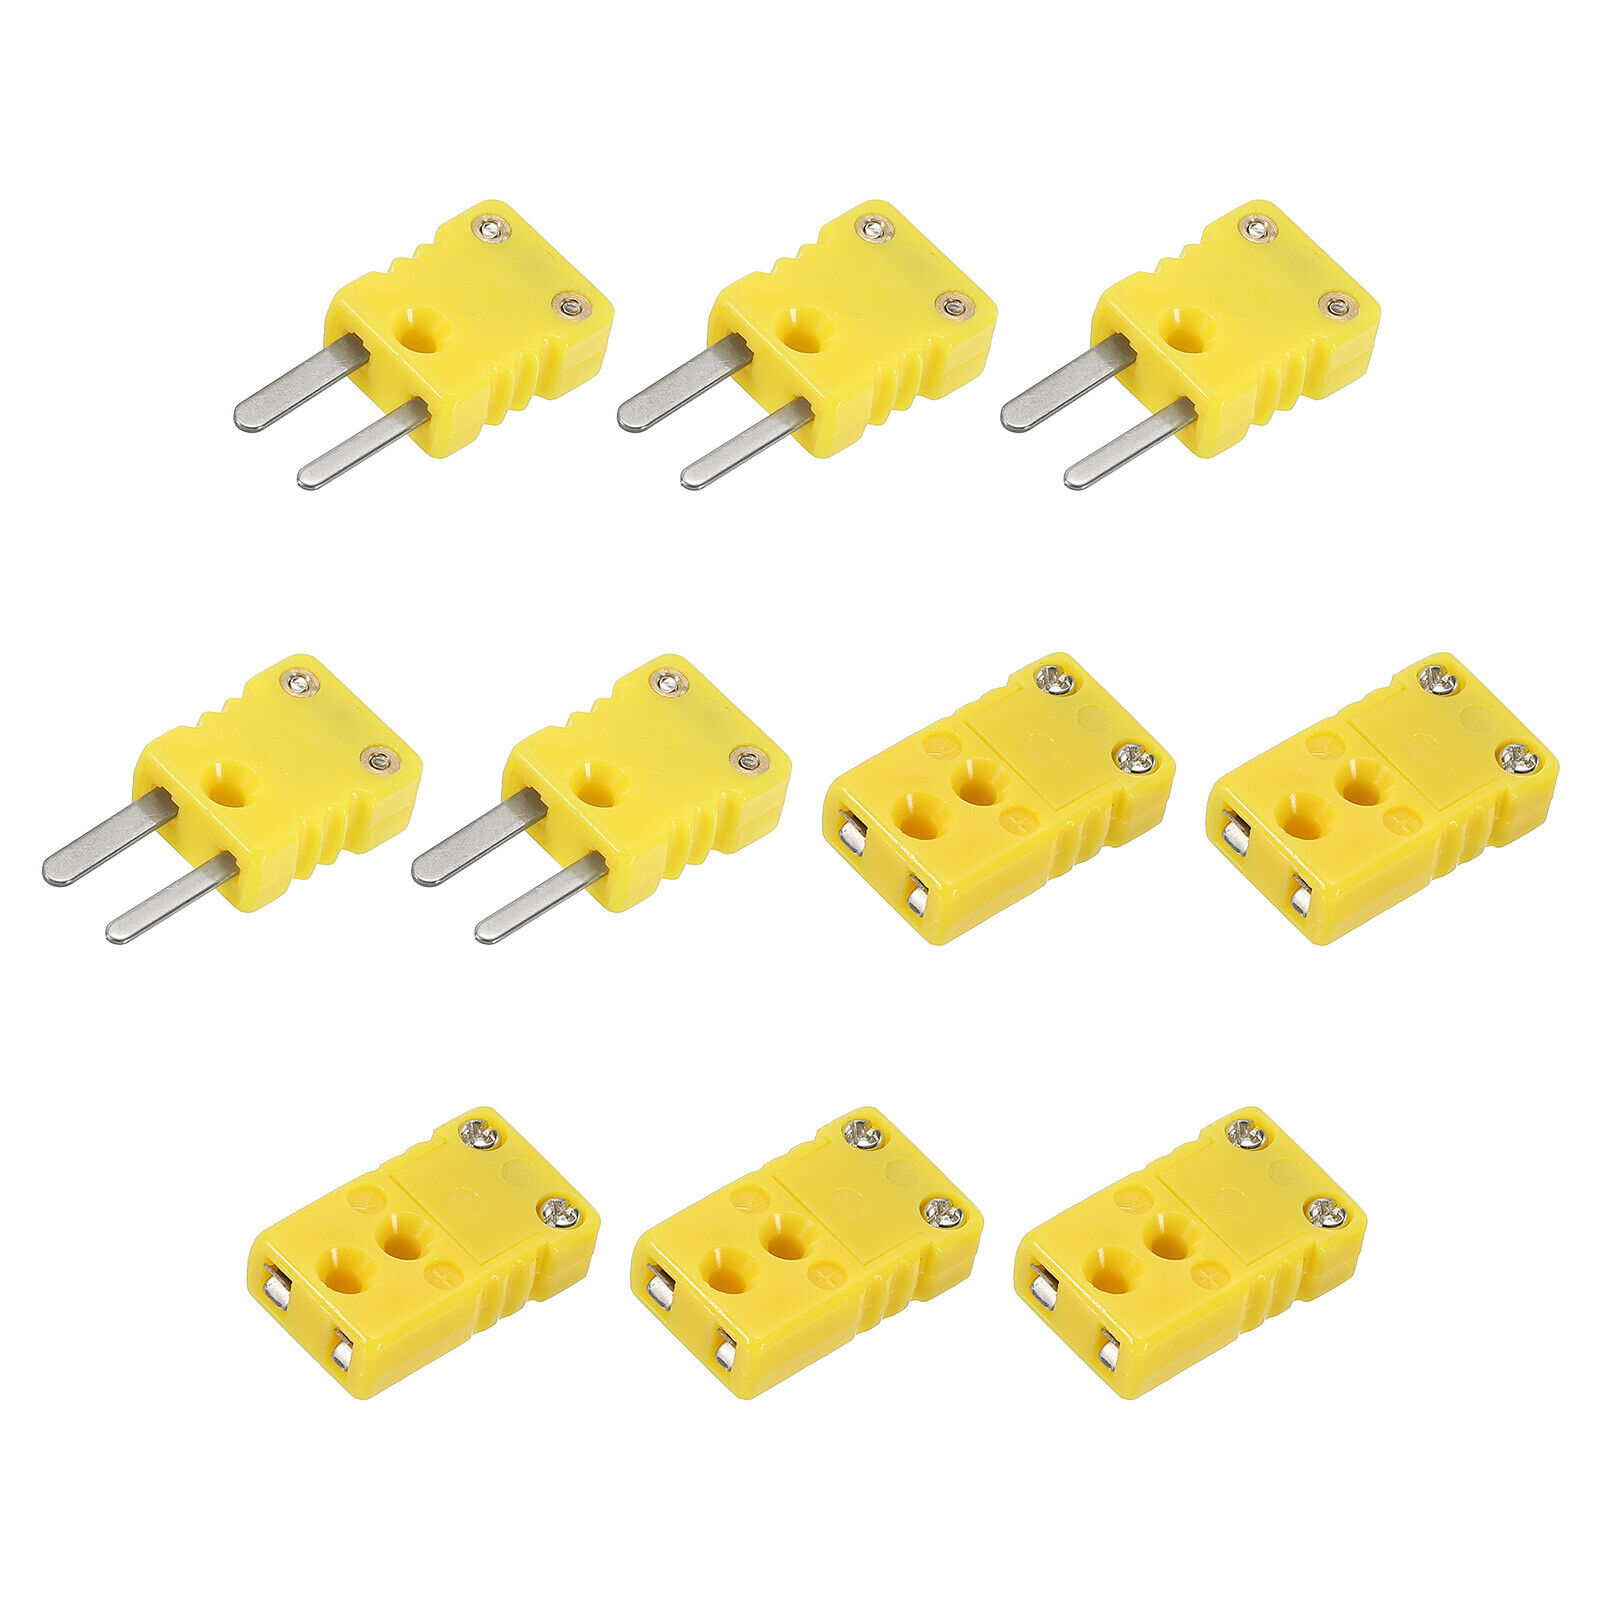 5 Set Thermocouple Wire Connectors Mini K Type Male Female Plug Adapter 120°C